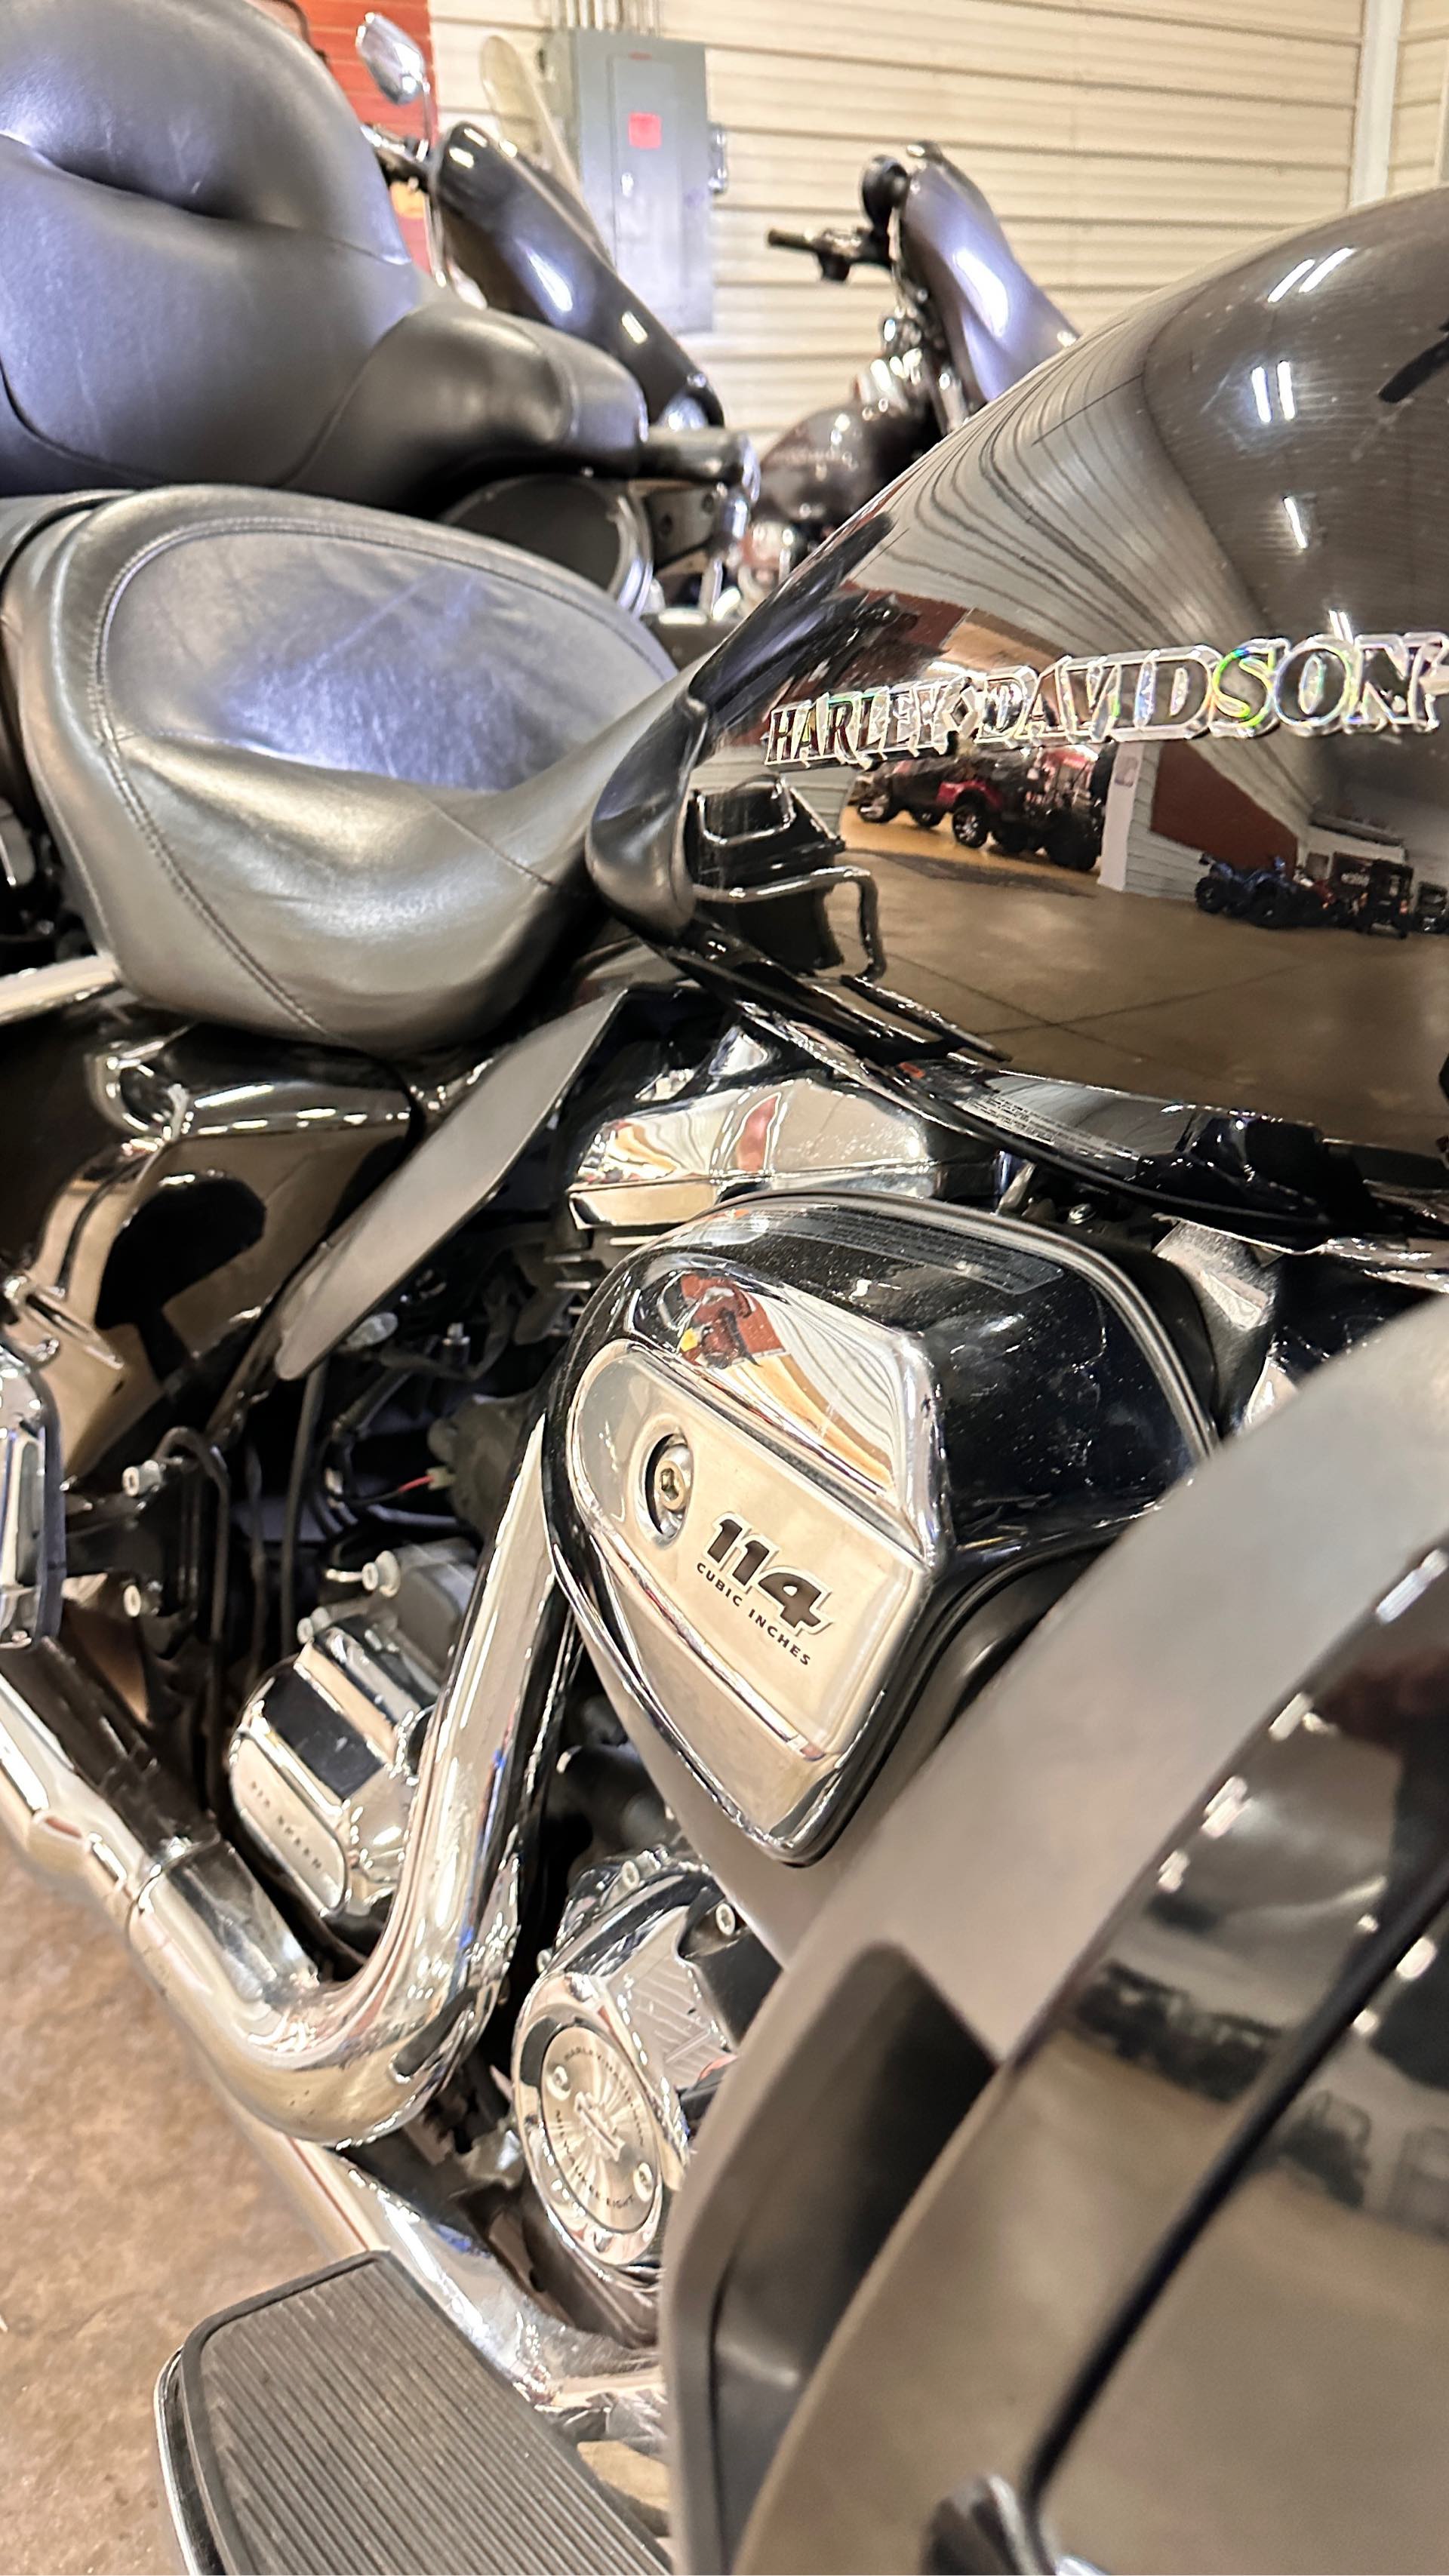 2019 Harley-Davidson Electra Glide Ultra Limited at Southern Illinois Motorsports